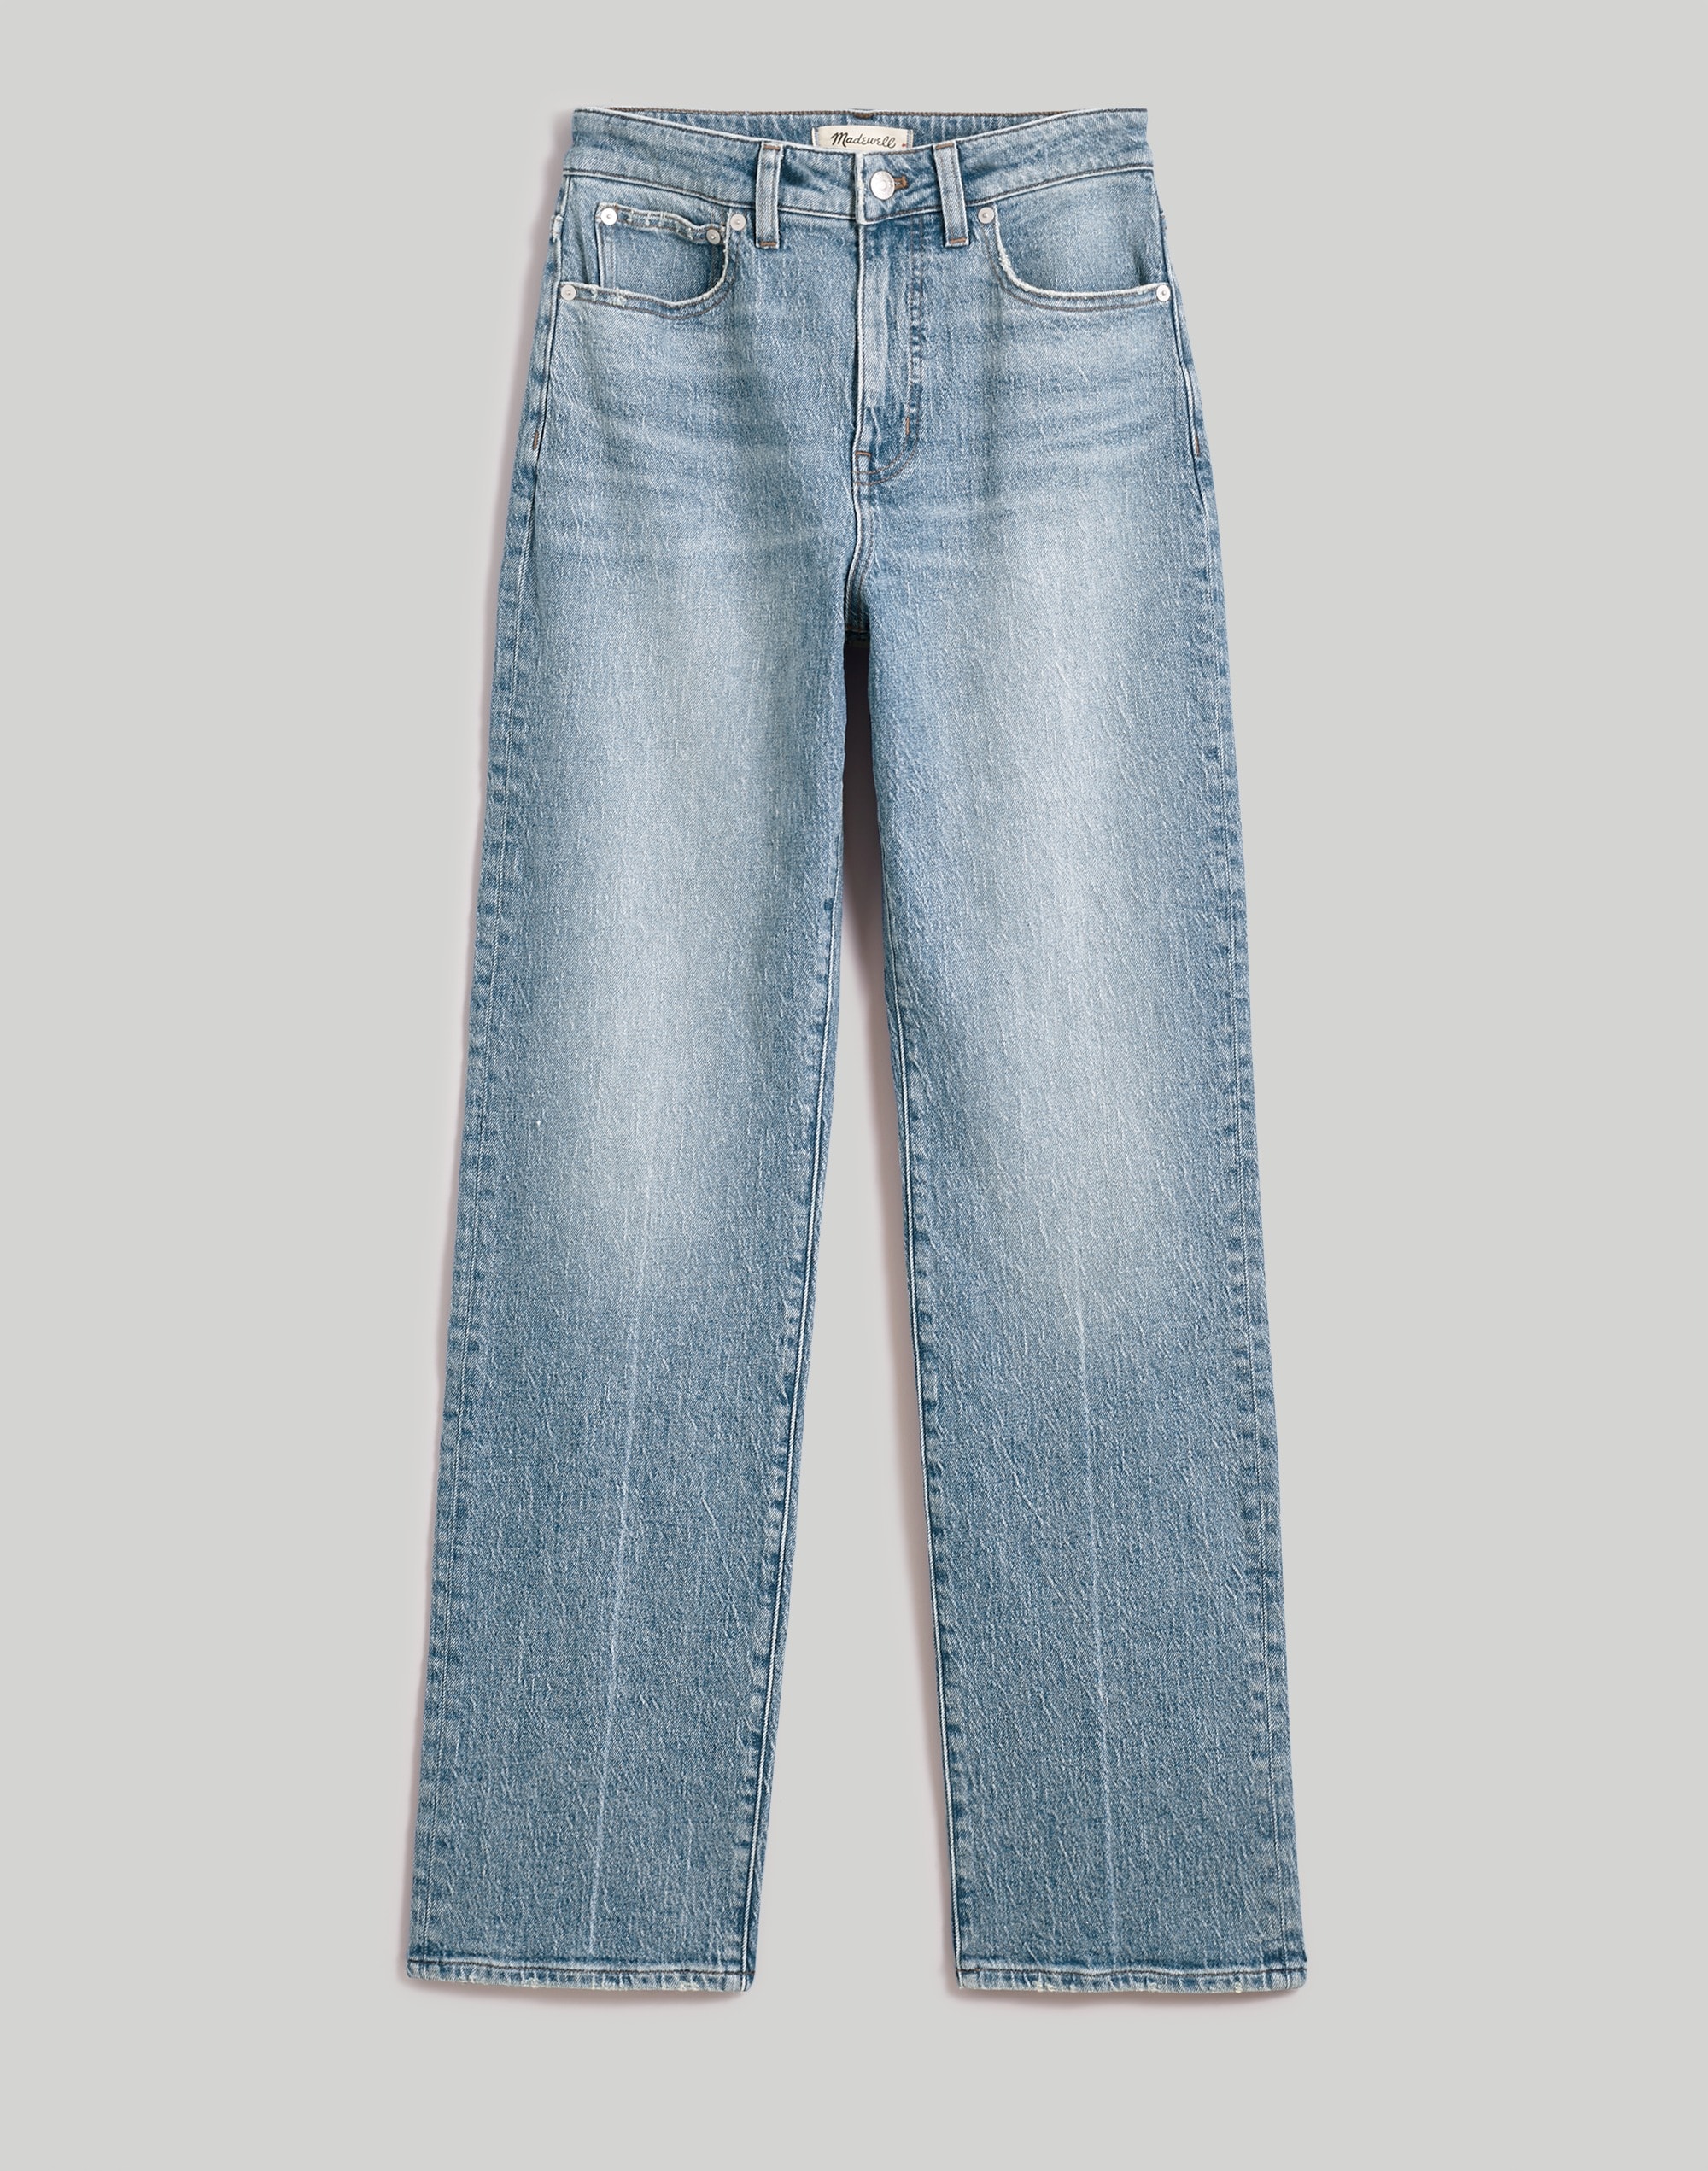 The Curvy '90s Straight Jean